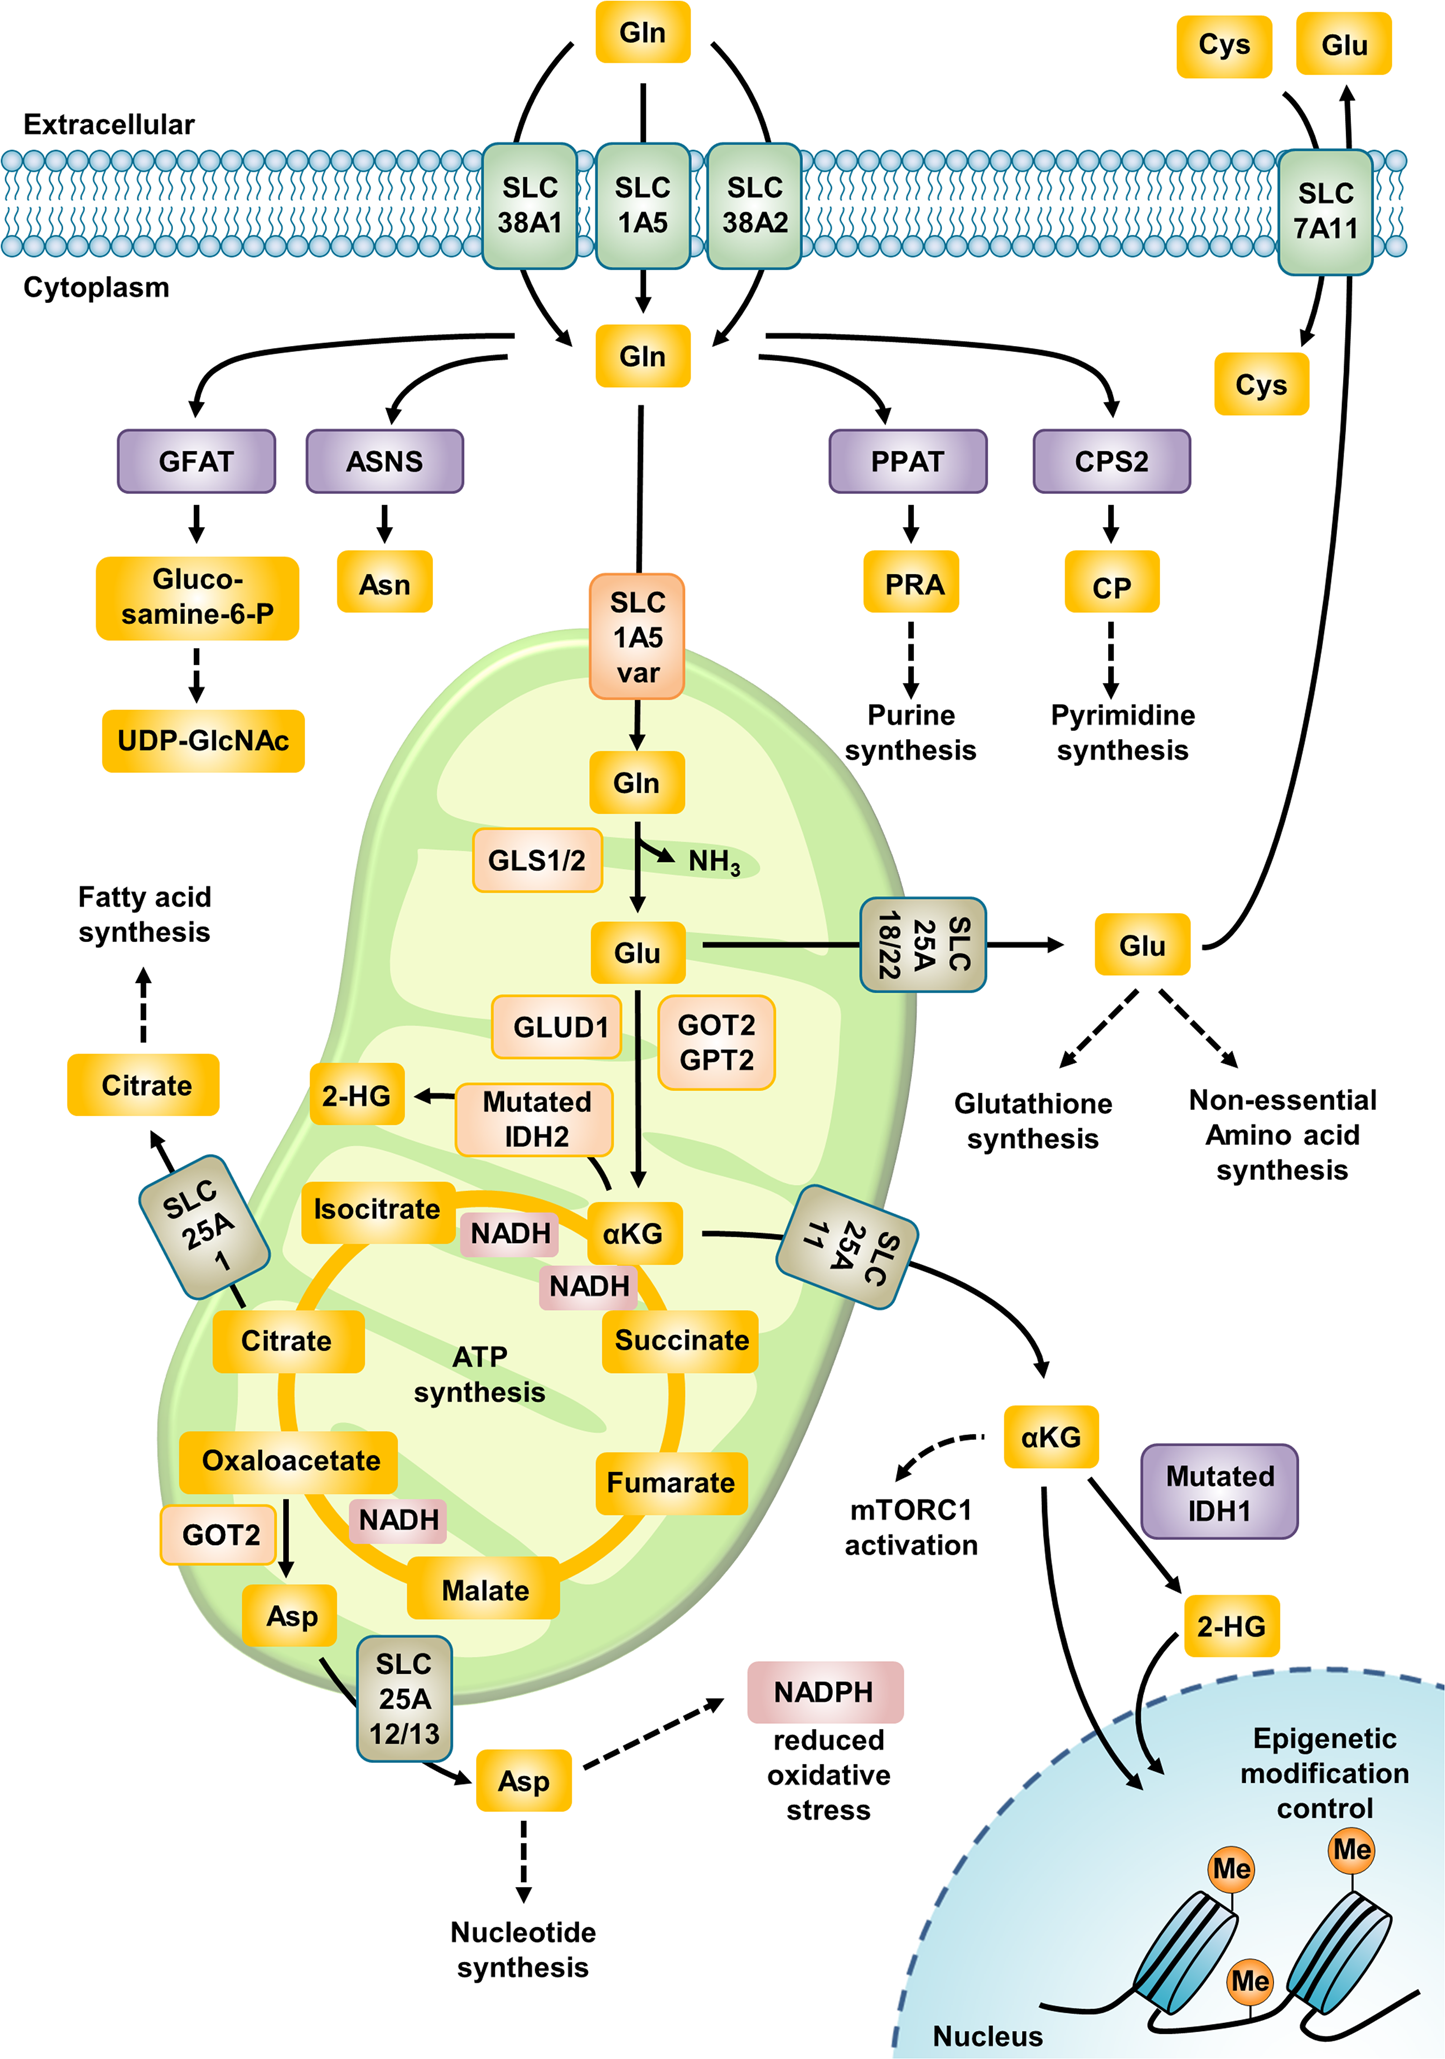 Glutamine reliance in cell metabolism | Experimental & Molecular Medicine